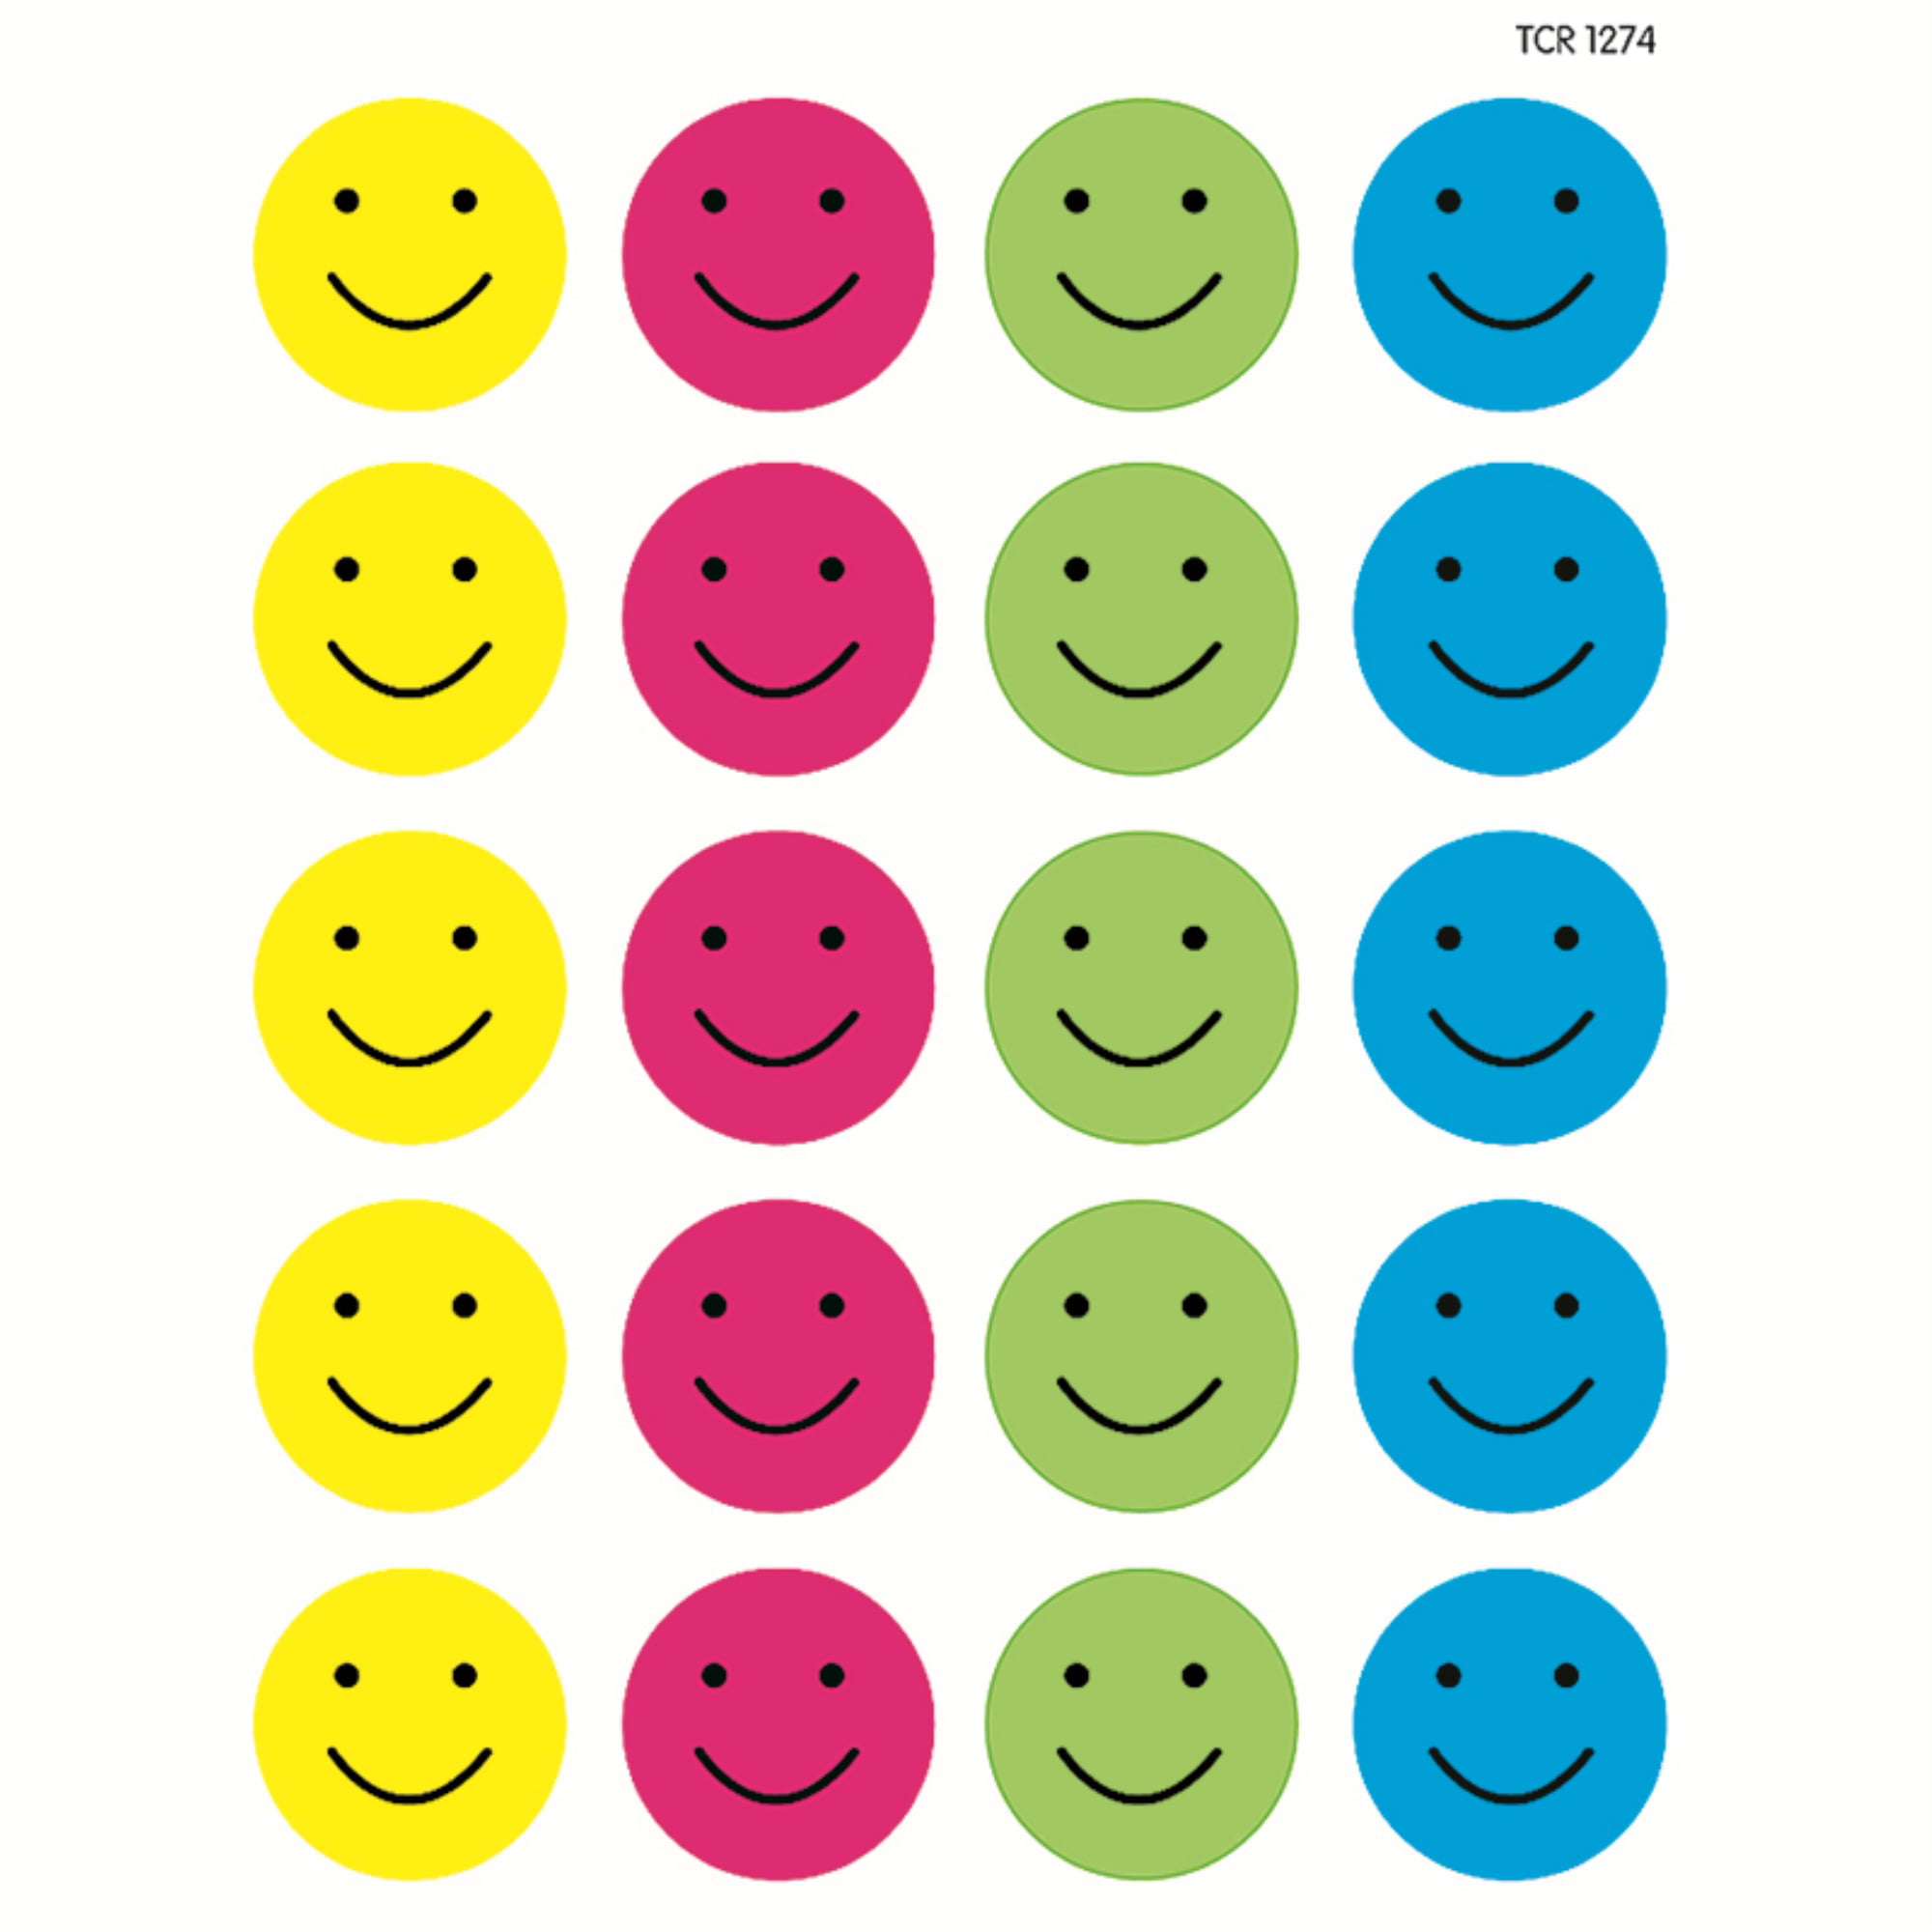 54 Smiley Happy Face Stickers 15 mm Round Smile Teacher Labels Reward School